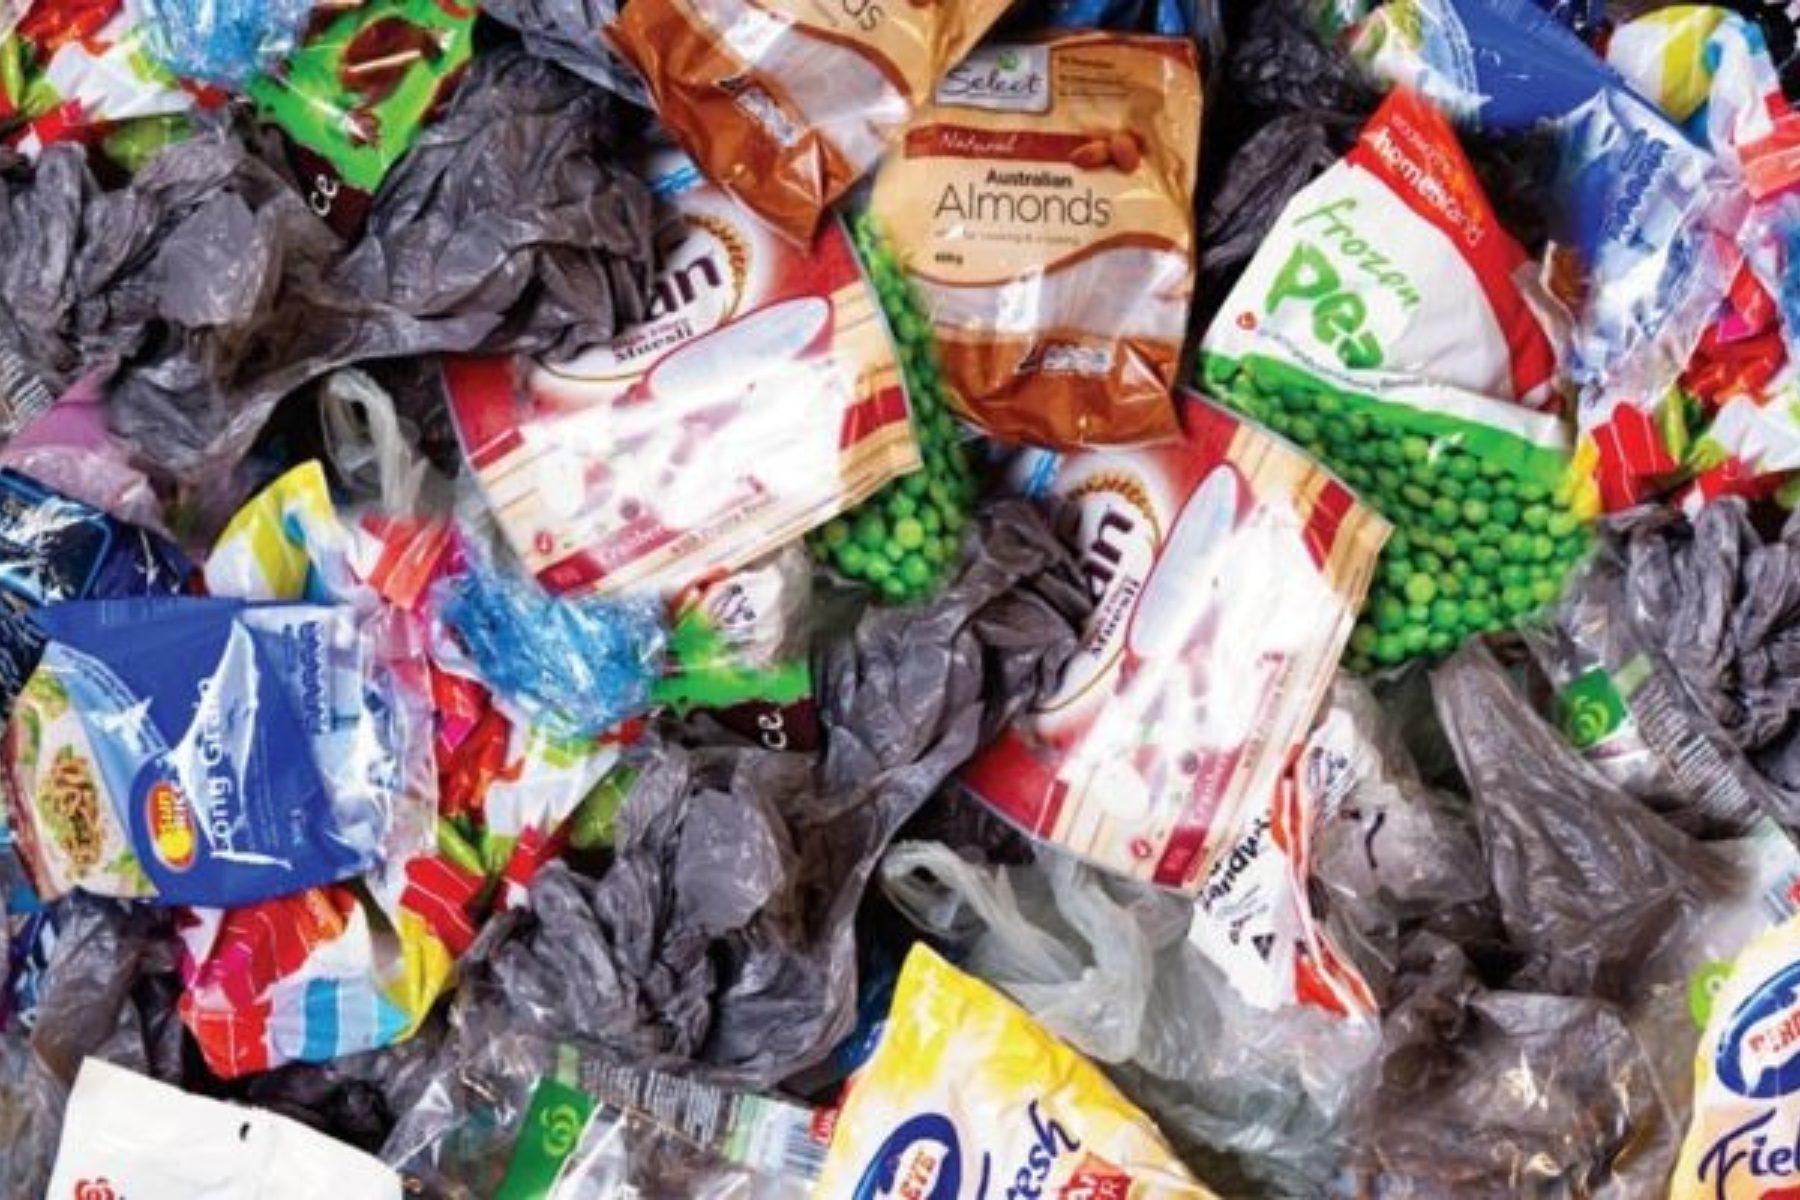 APCO Update, new Soft Plastics labelling option - National Retail